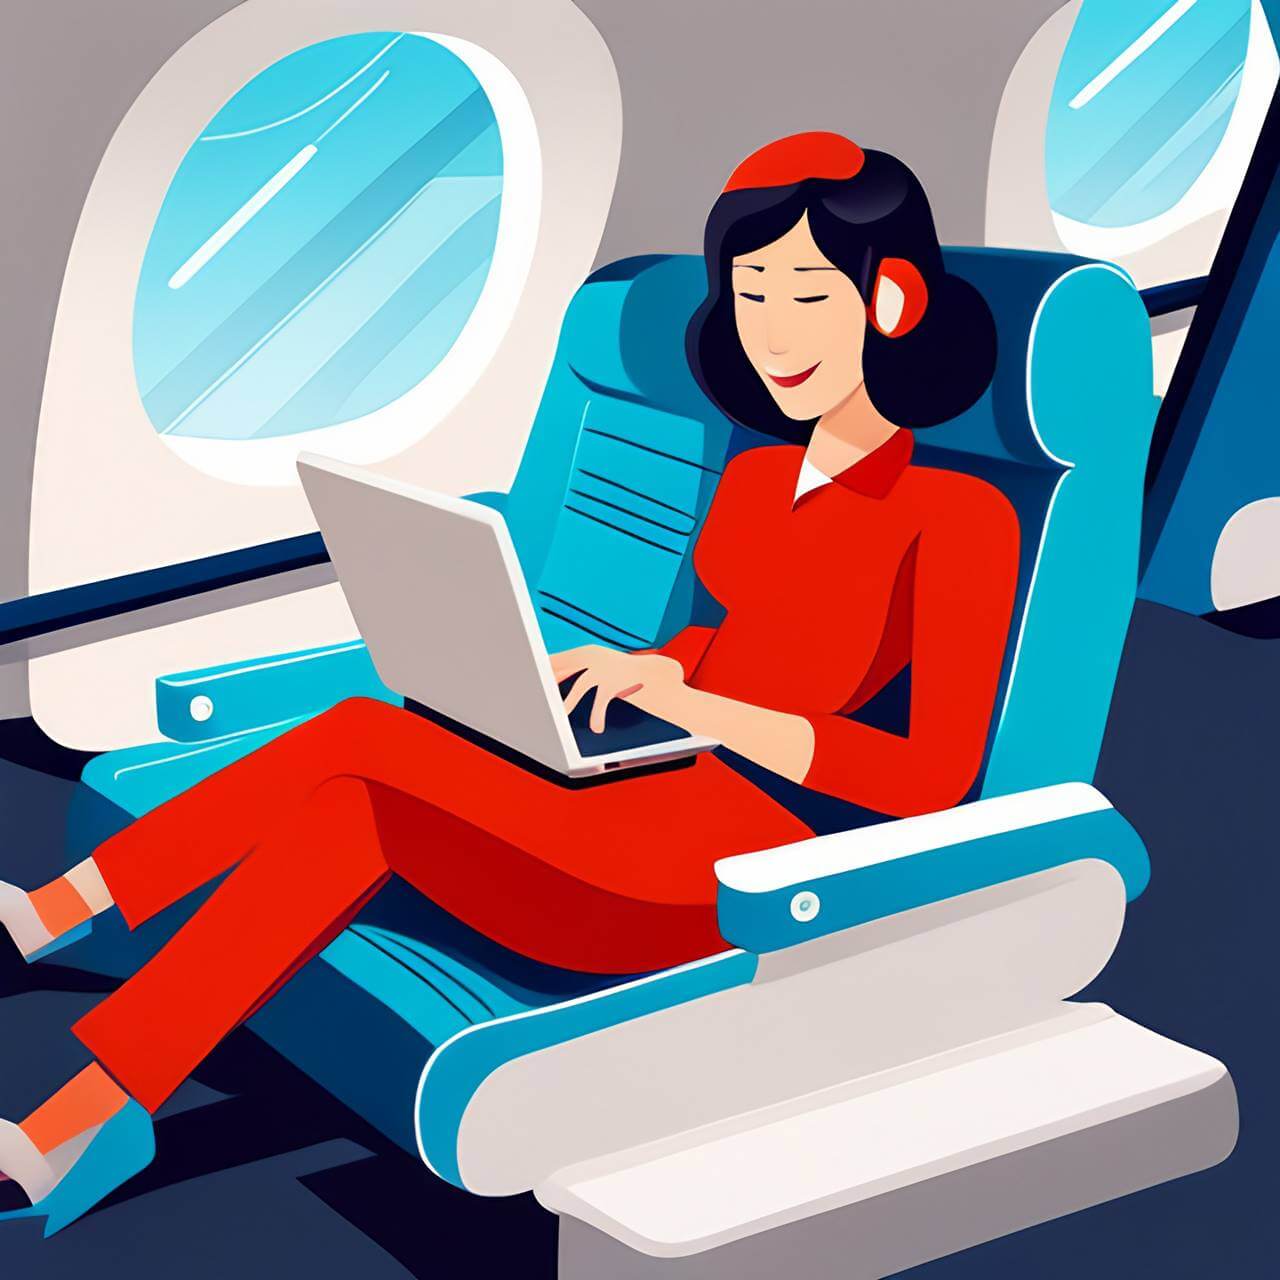 JALWifi Japan airlines inflight internet wifi